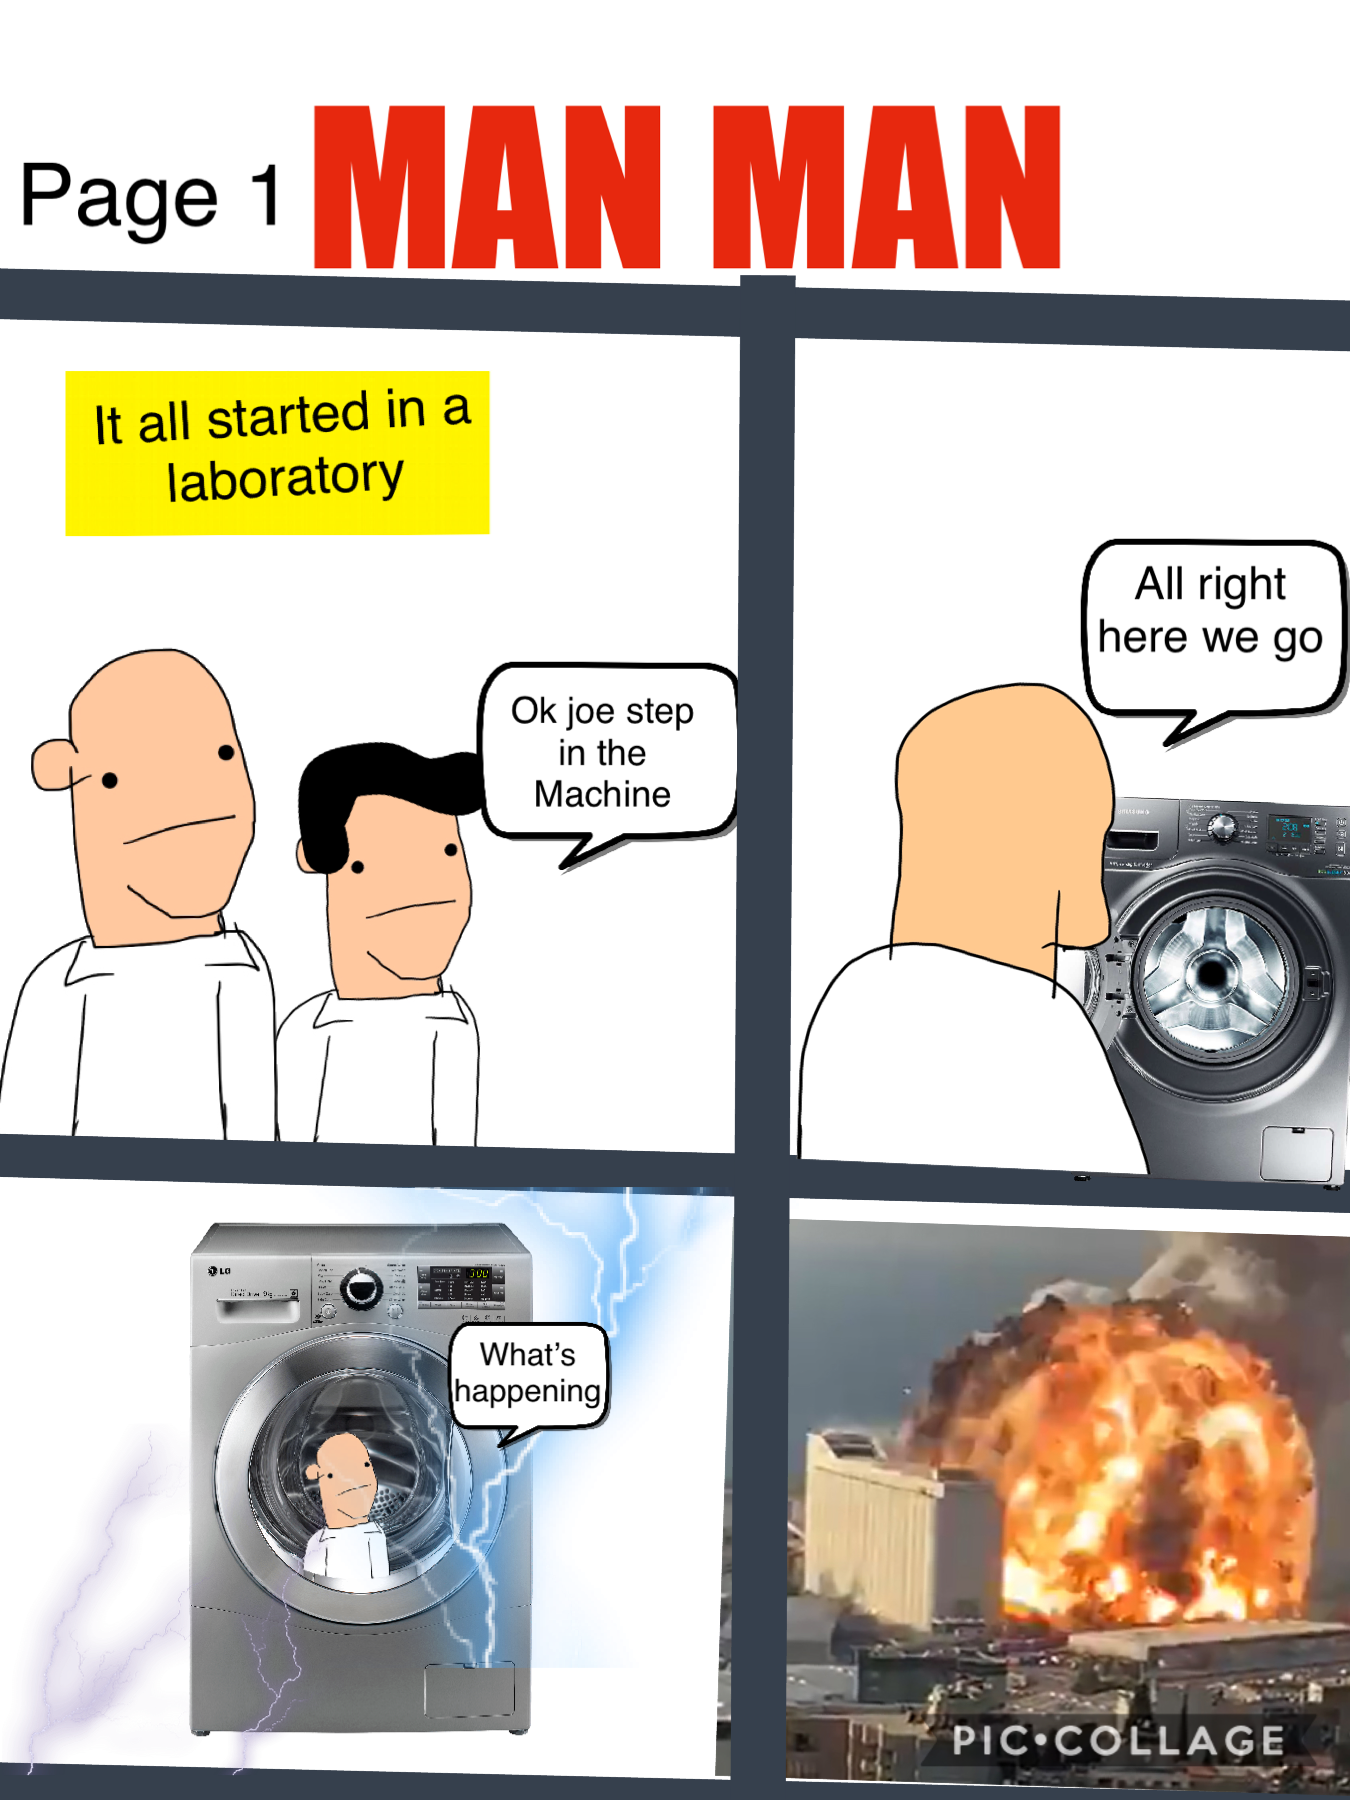 The origin of MAN MAN